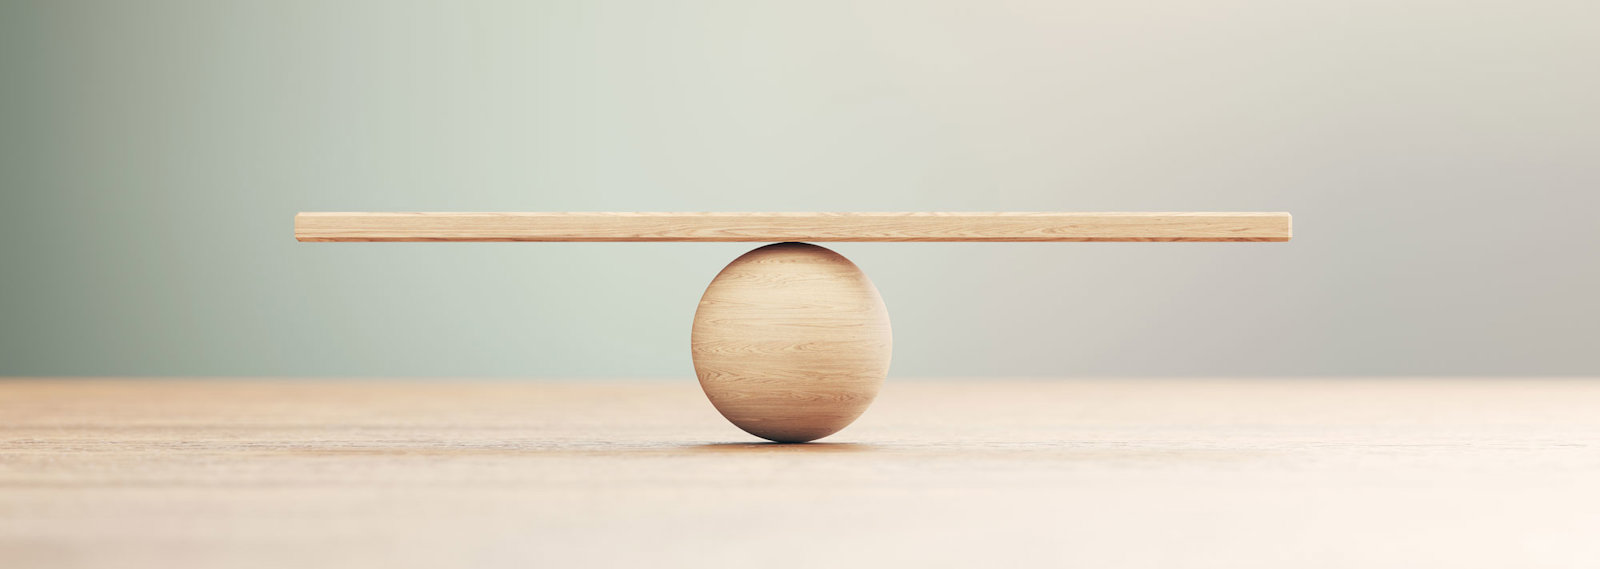 A board balancing on a ball